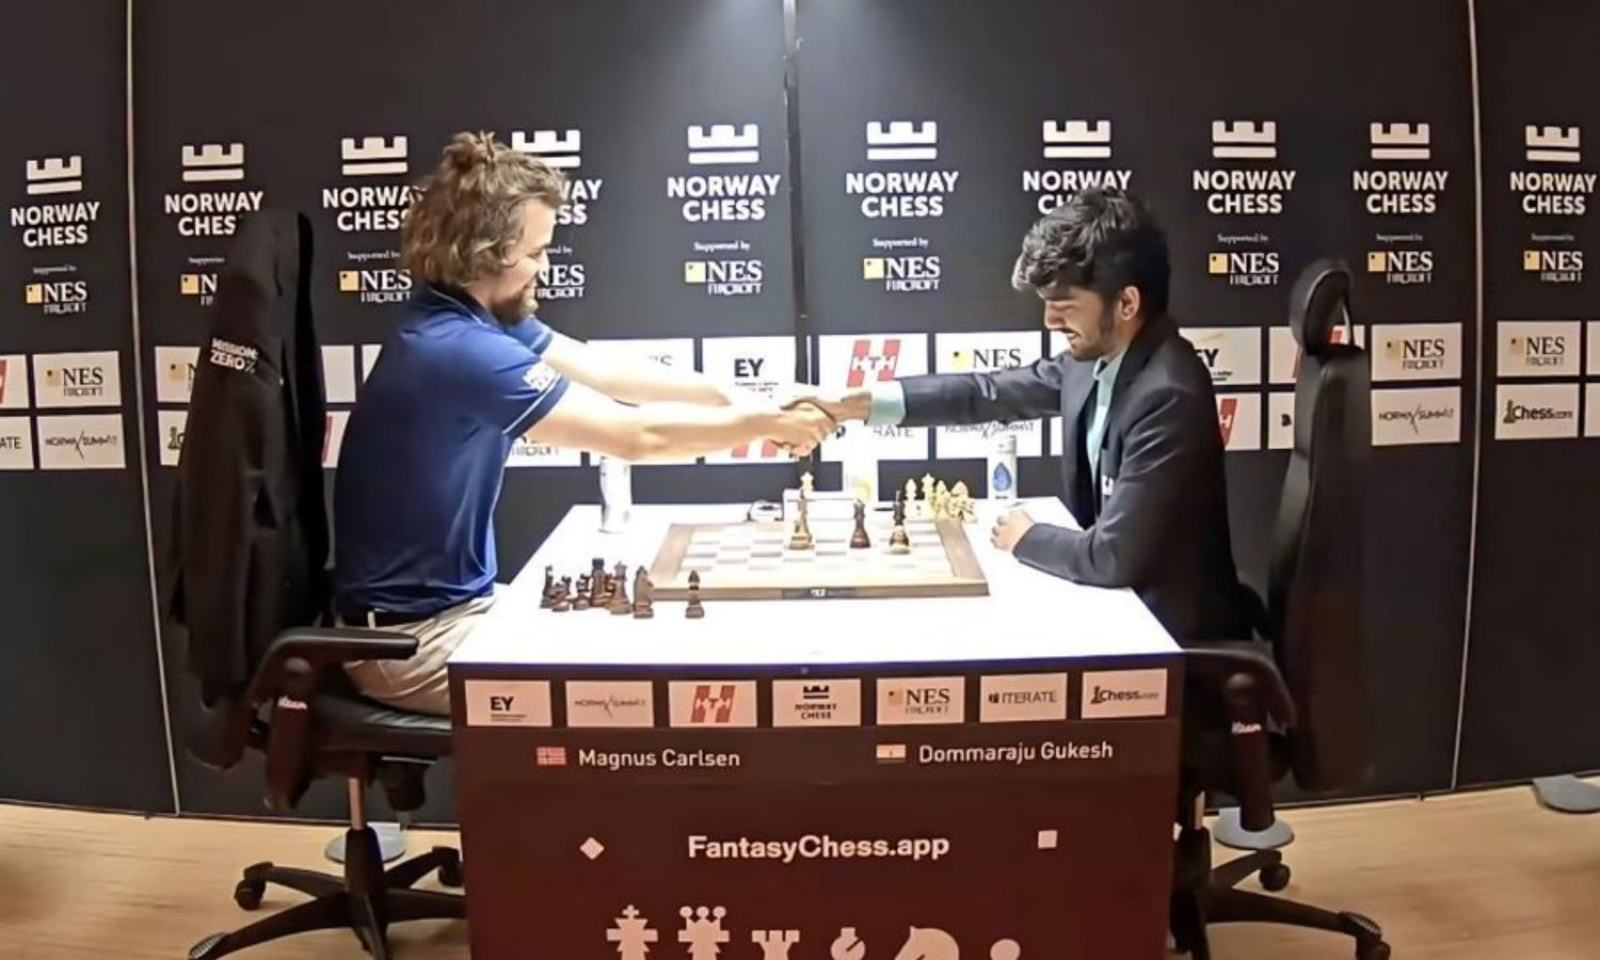 Gukesh takes on Magnus Carlsen's endgame challenge